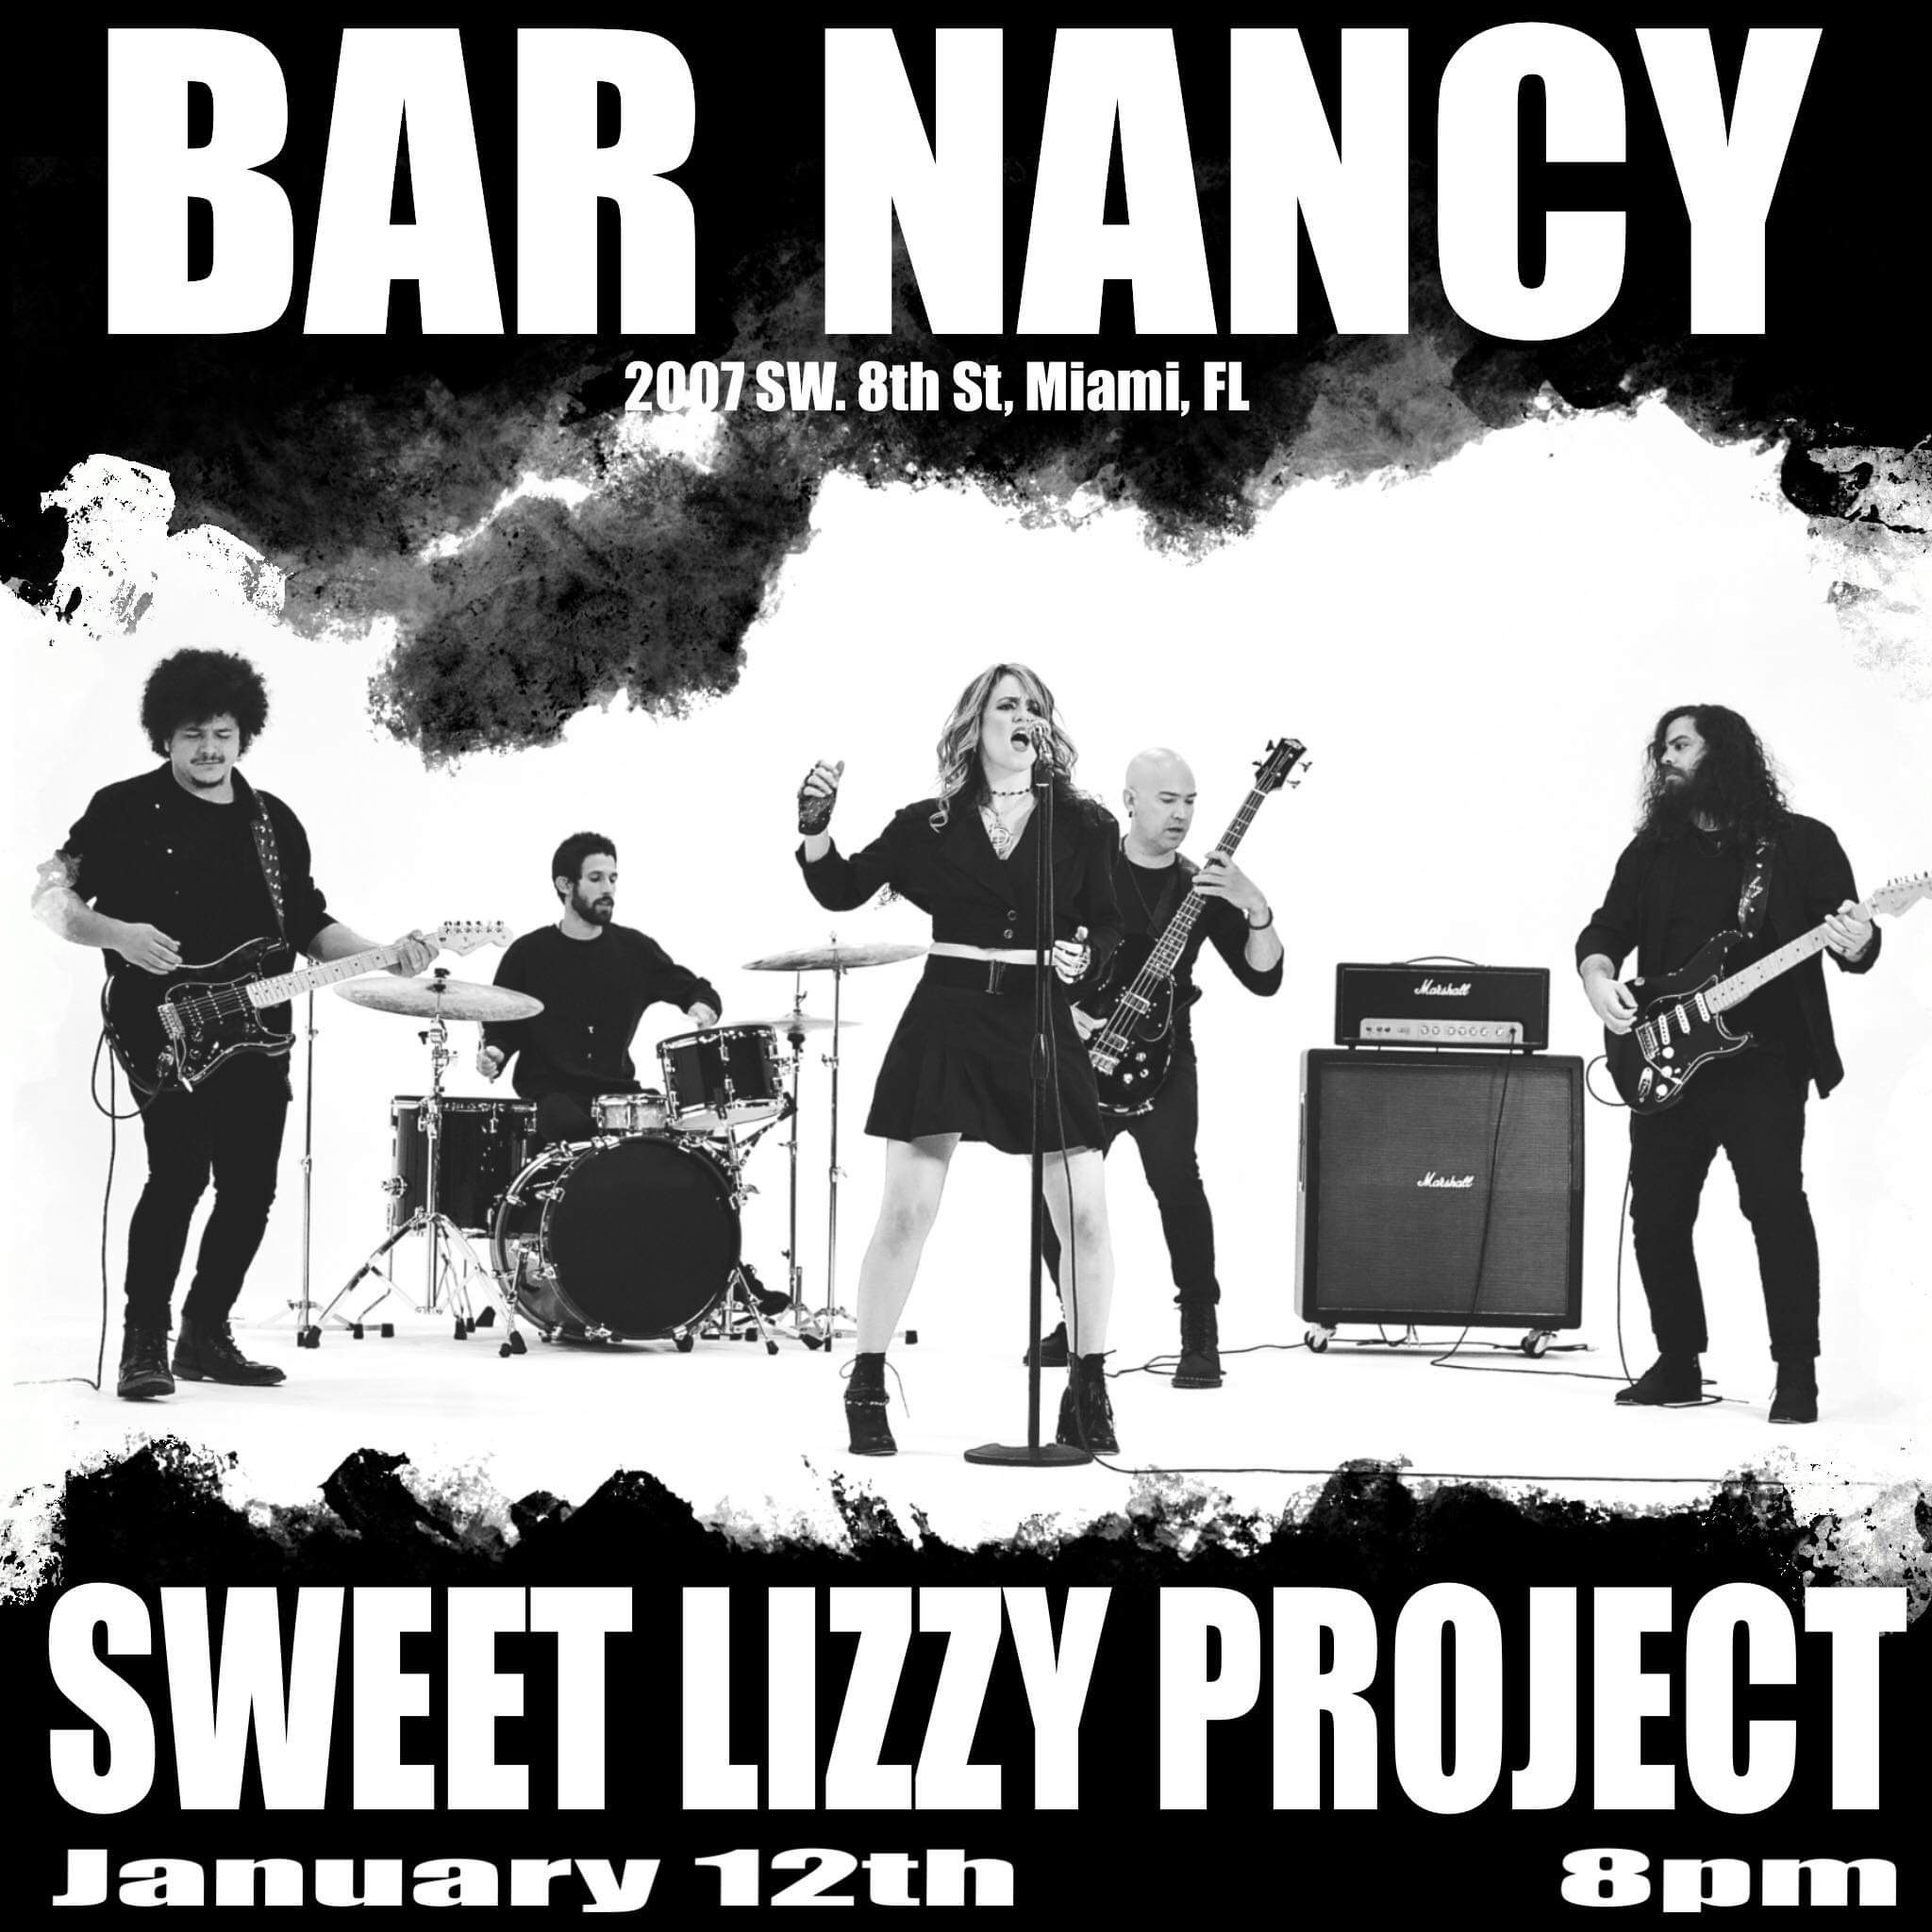 Sweet Lizzy Project at Bar Nancy - Jan 12th at 8PM